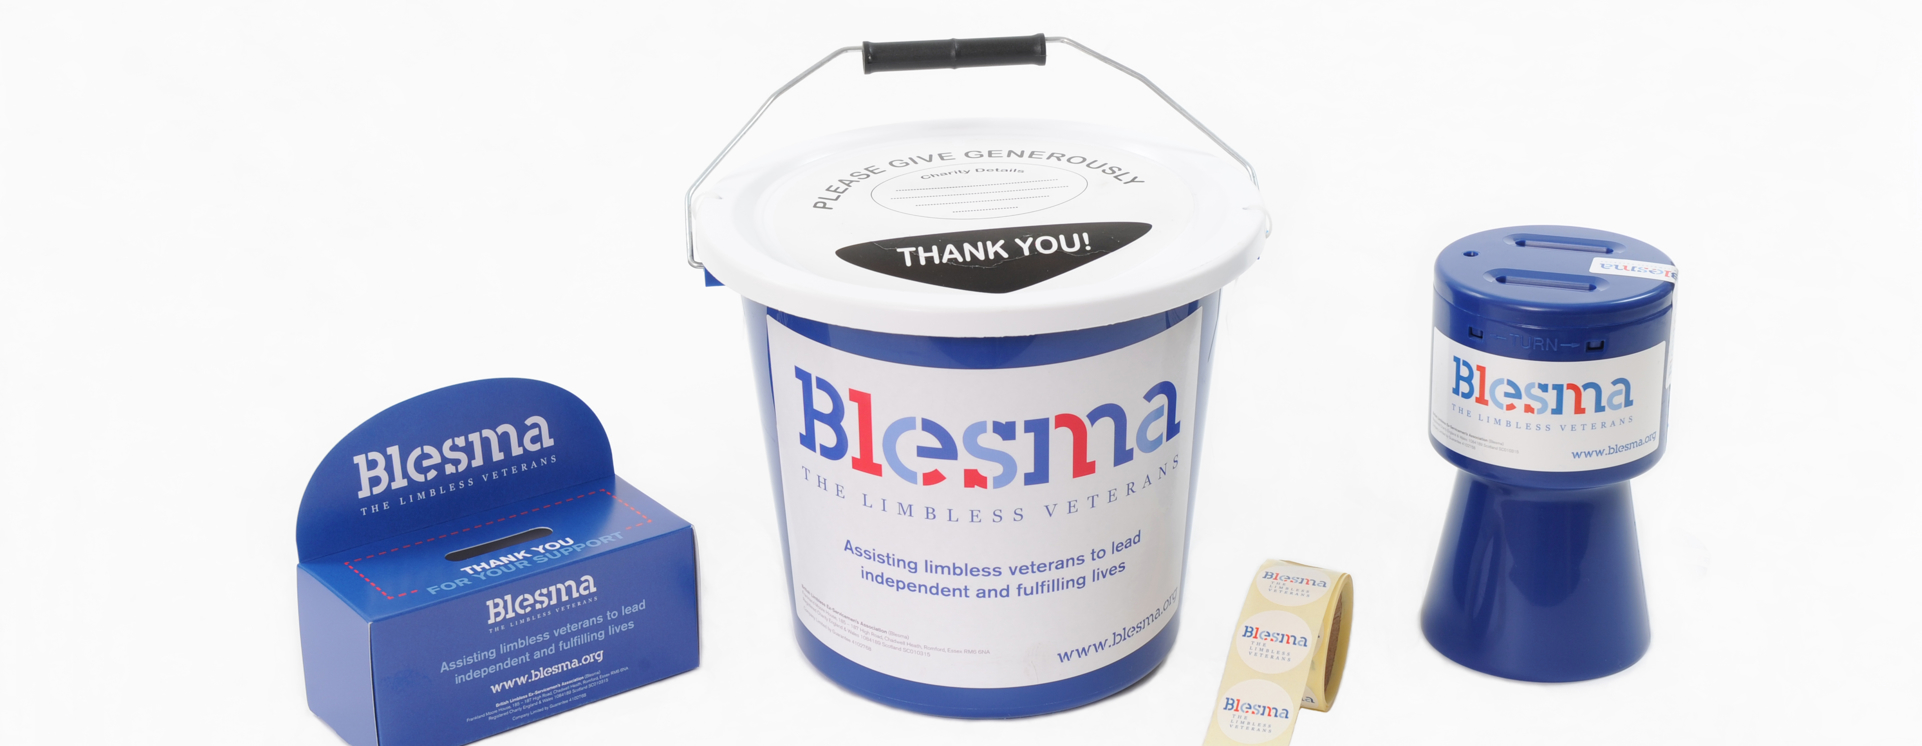 Blesma Fundraising items